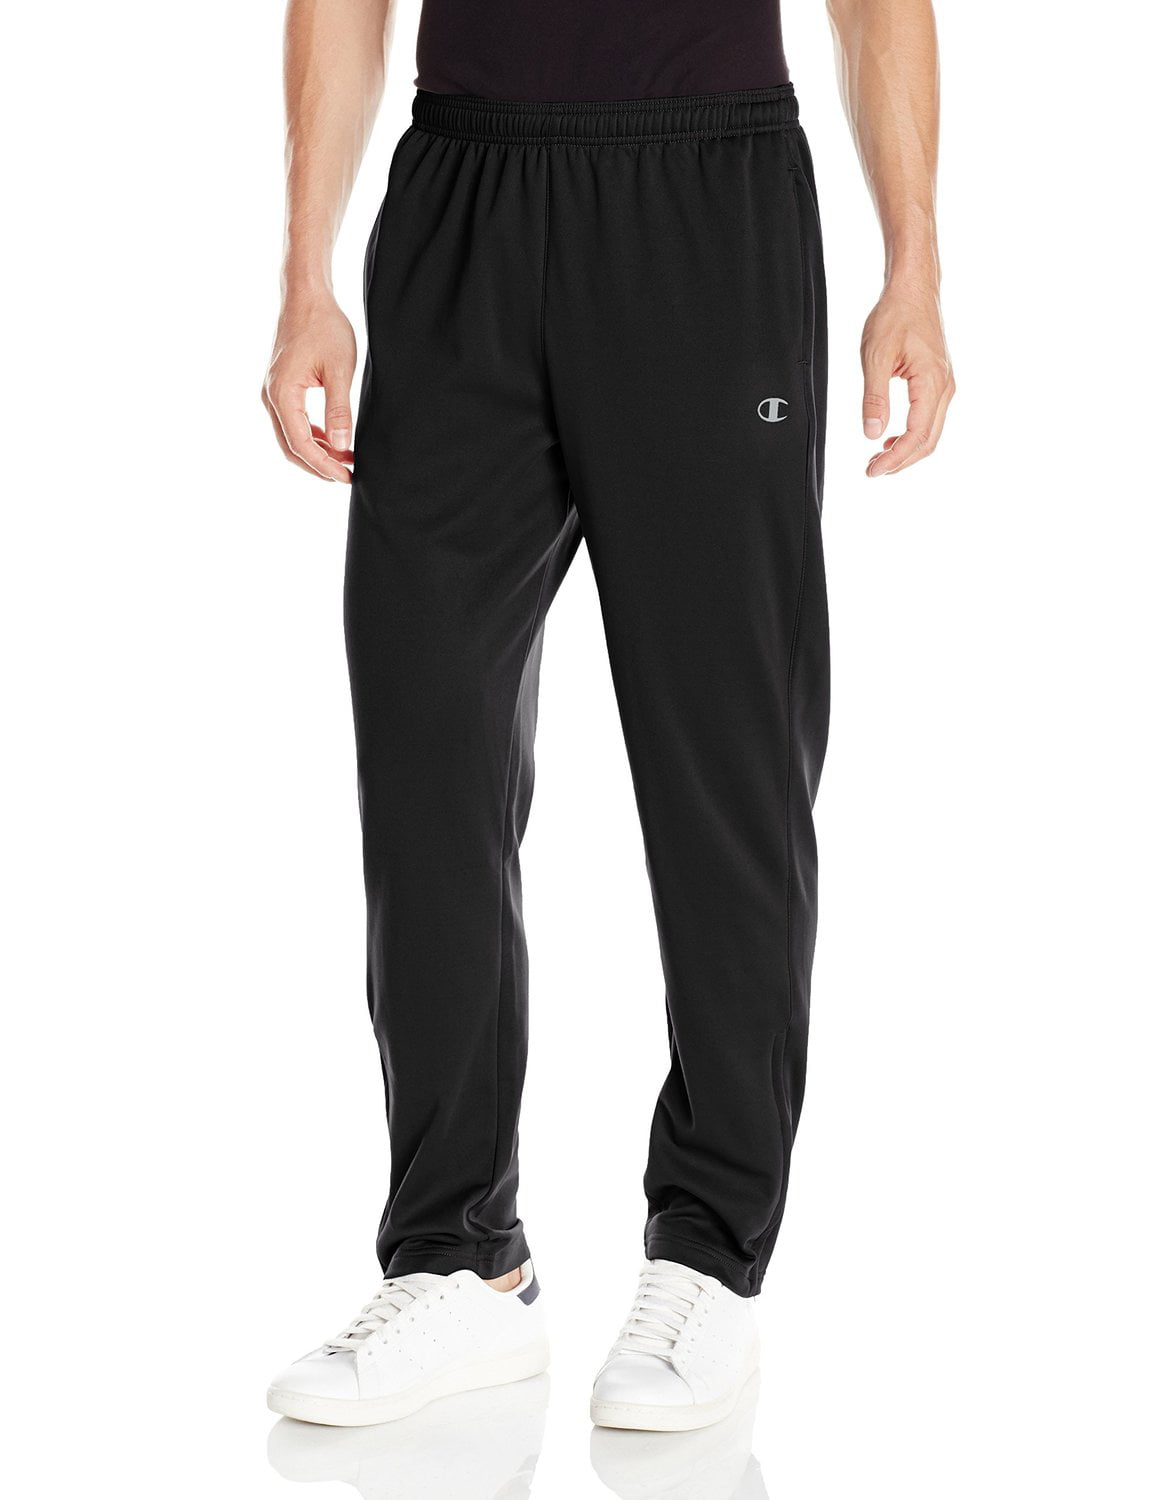 NEW Solid Black Mens Size Large L Fleece Pull-On Pants - Walmart.com